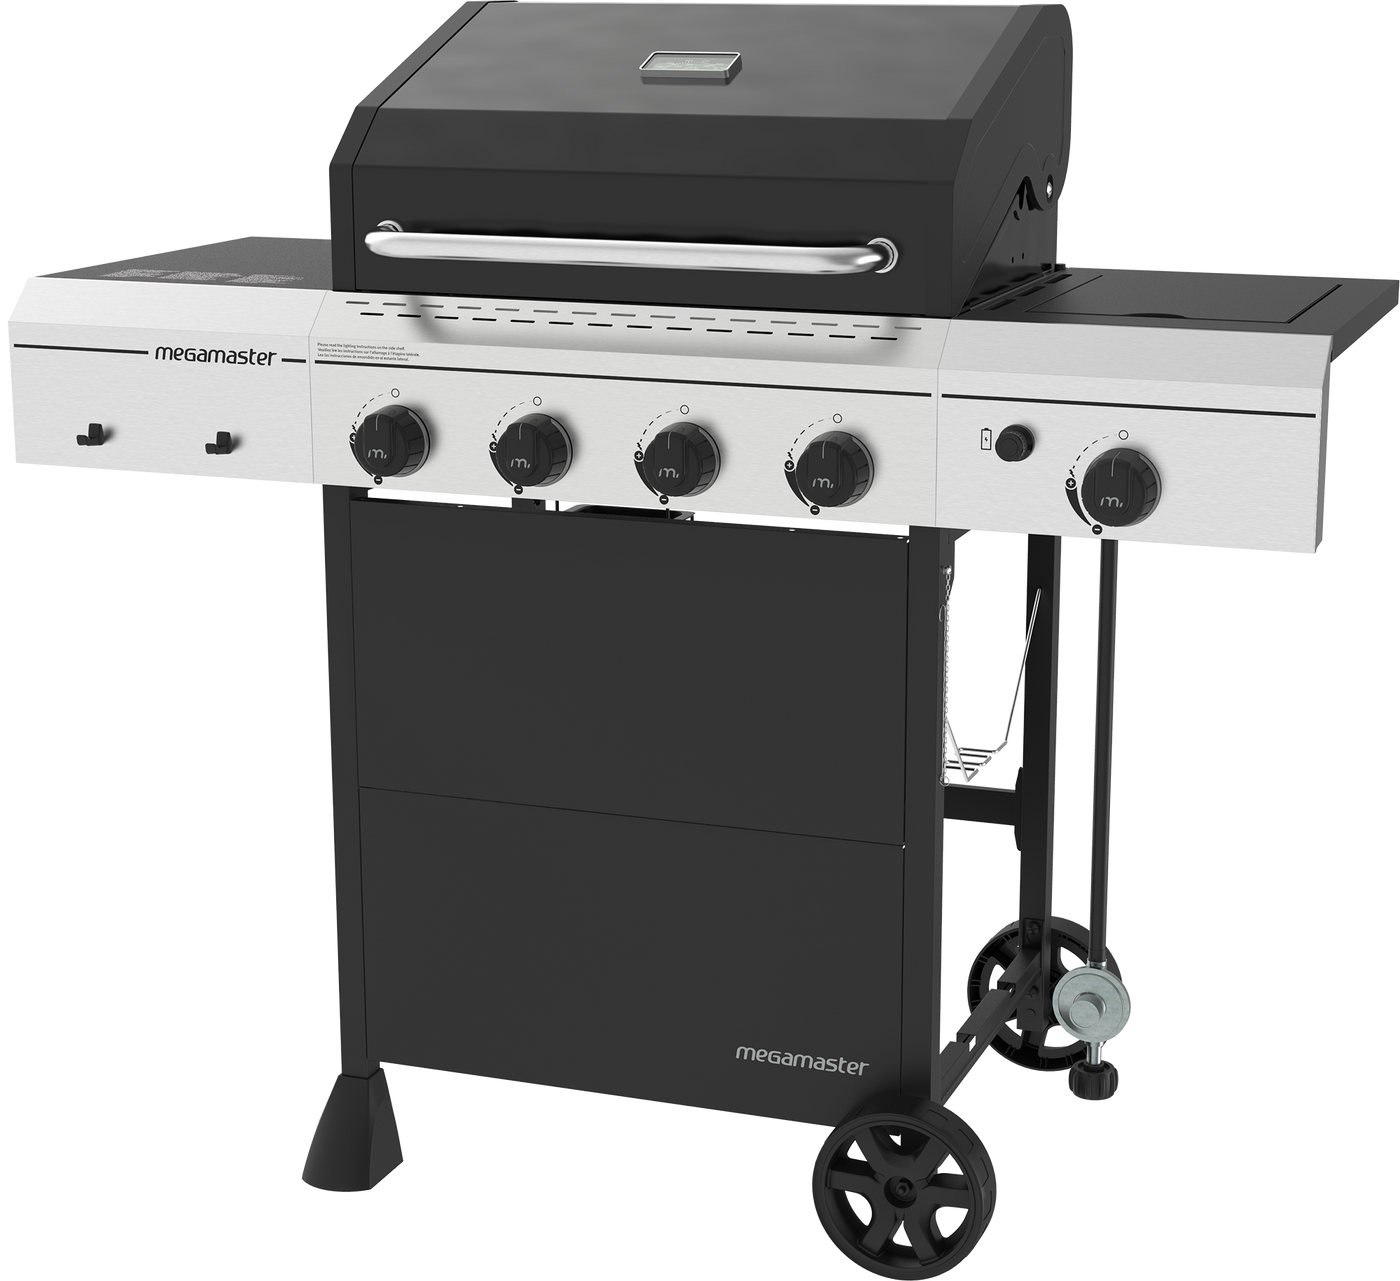 METRO Professional BBQ 4 Burner Gas Cooker 